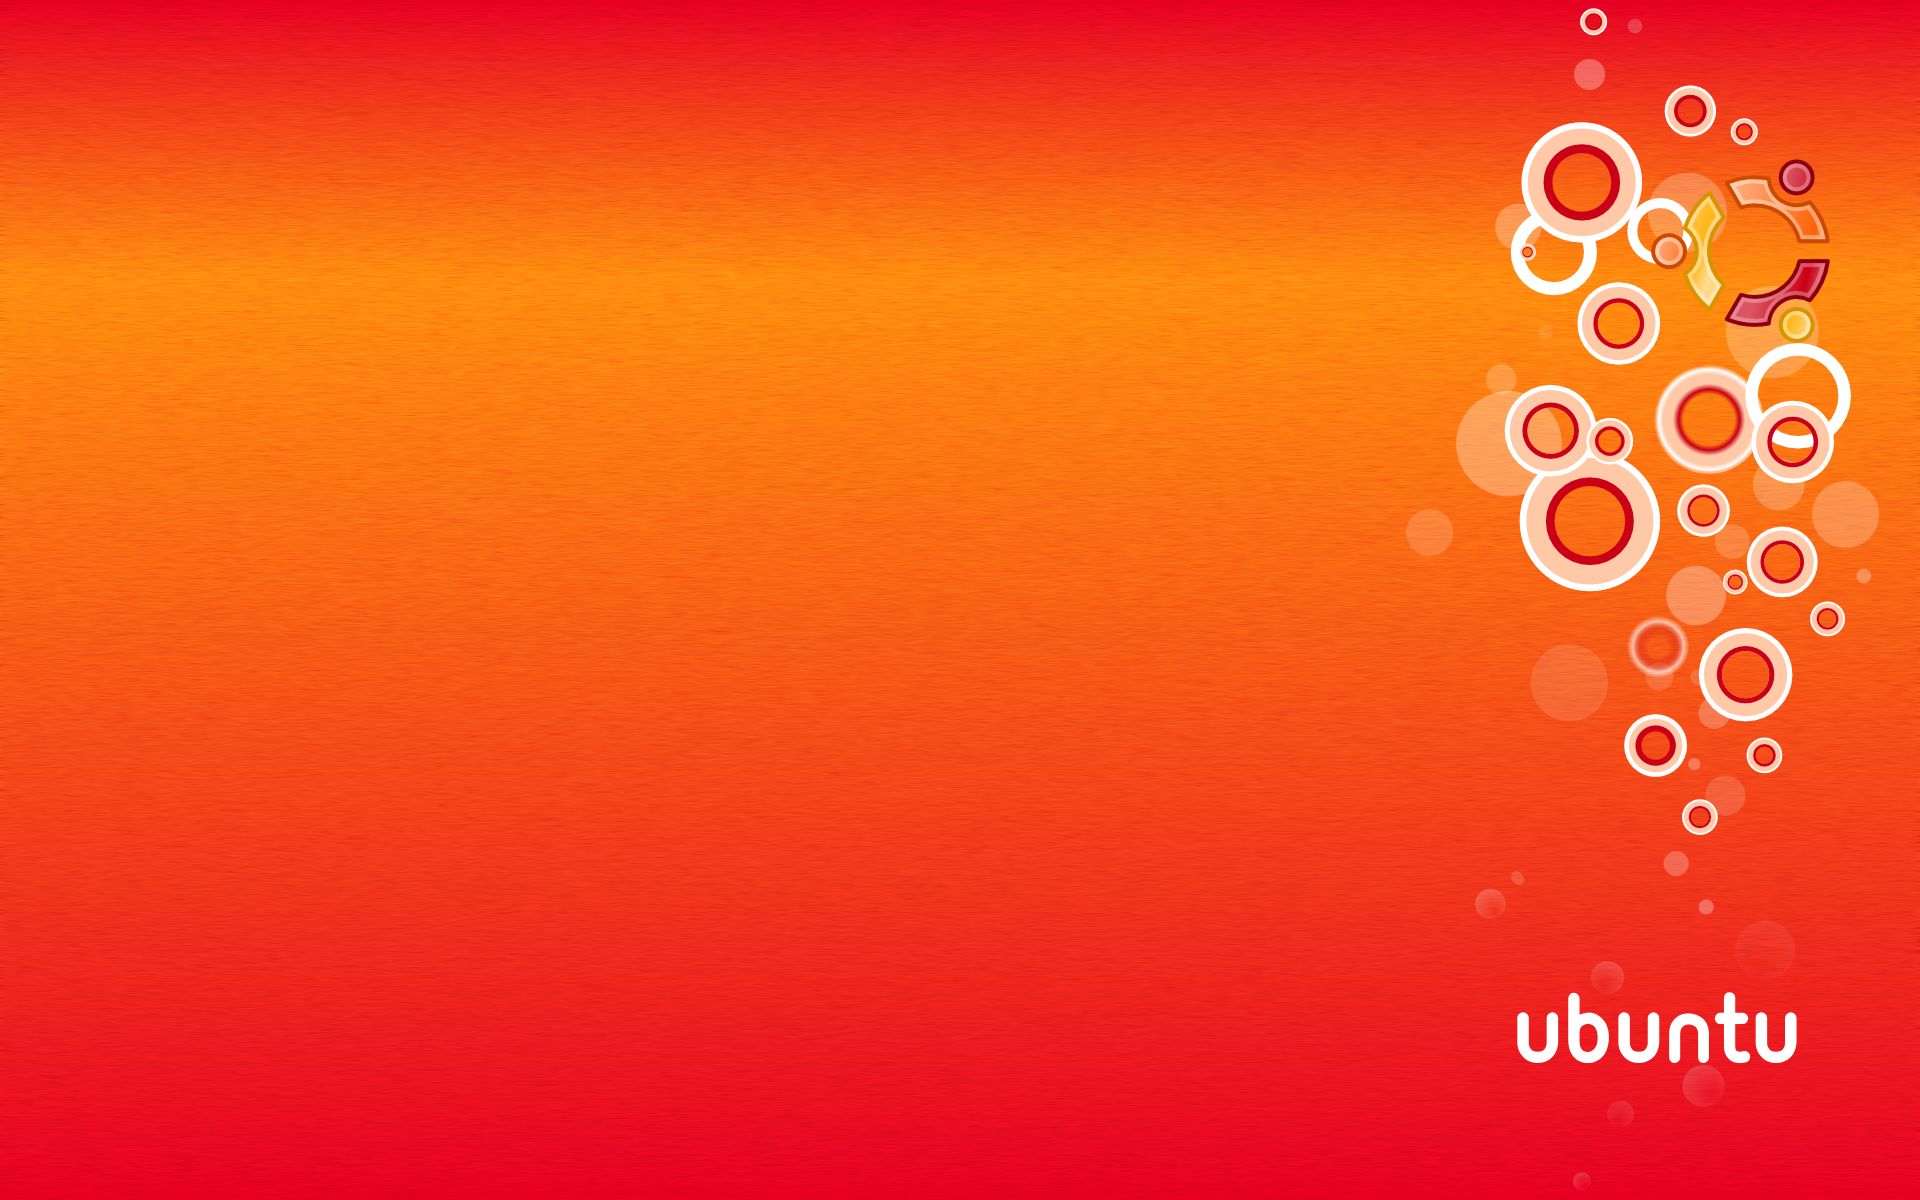 ubuntu wallpaper,rot,orange,gelb,himmel,pfirsich